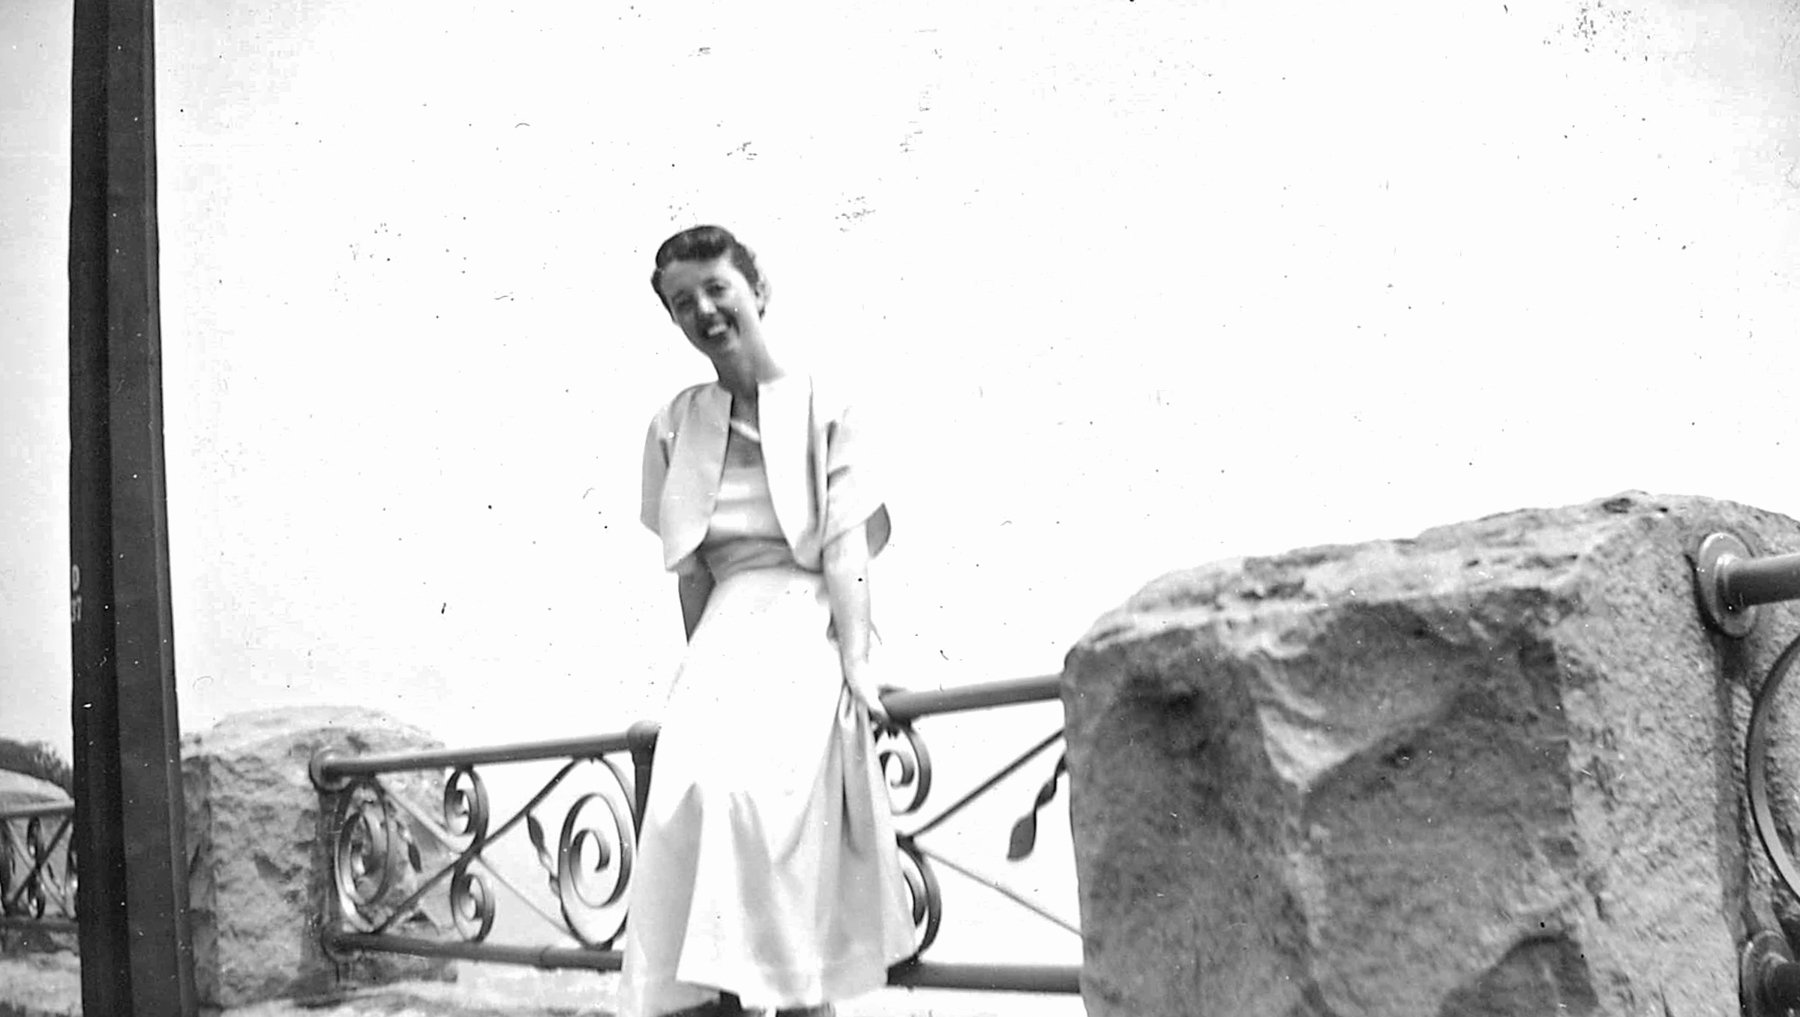 Audrey at Niagara Falls 1948